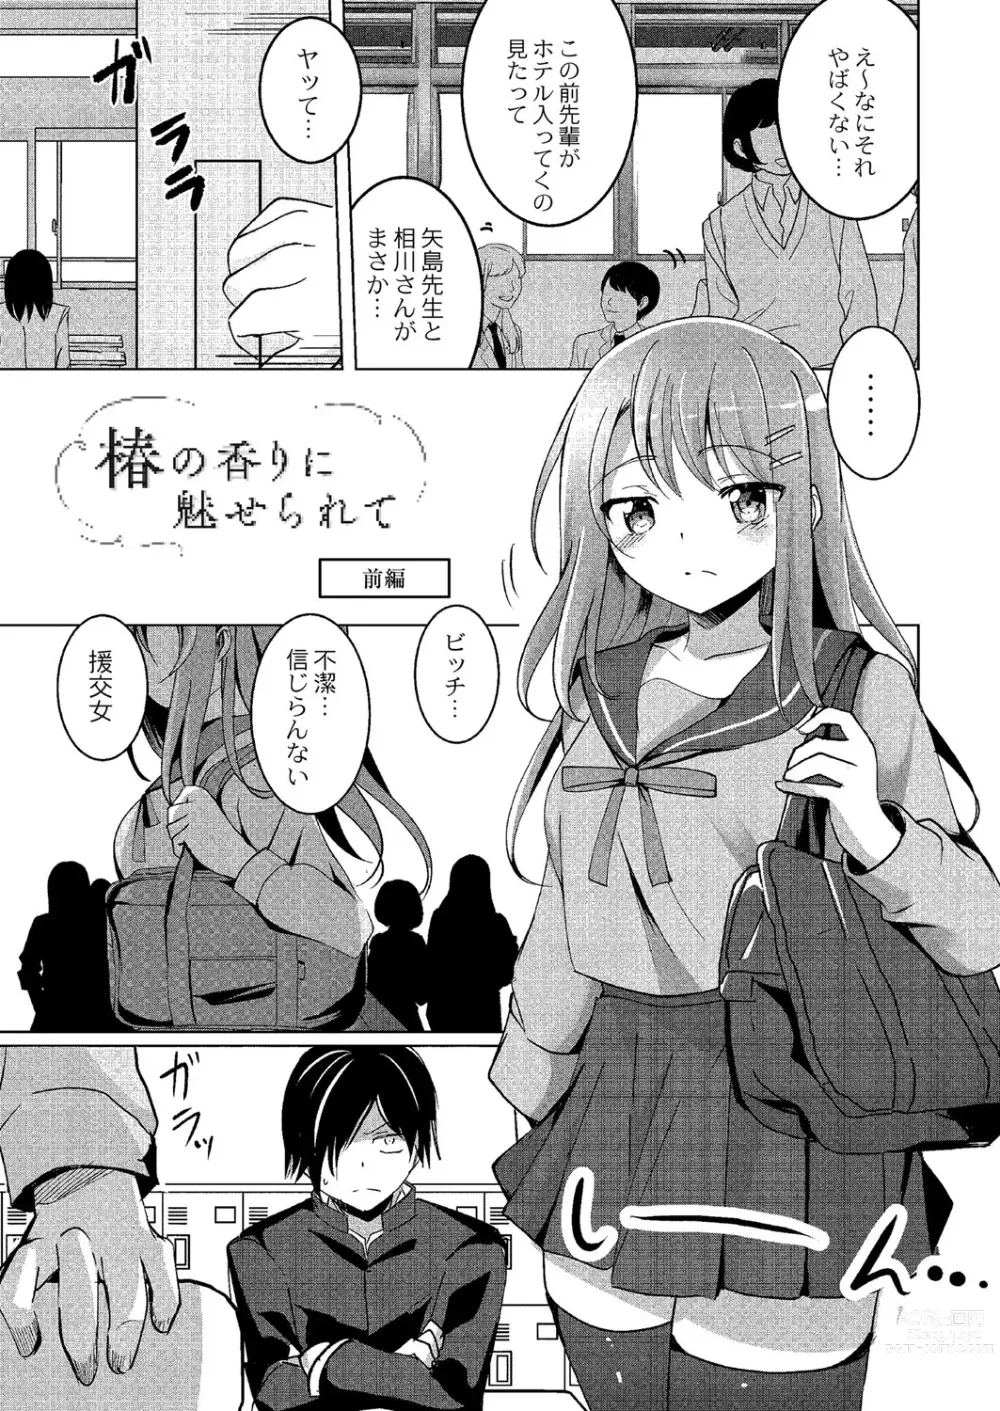 Page 4 of manga Wakarasare